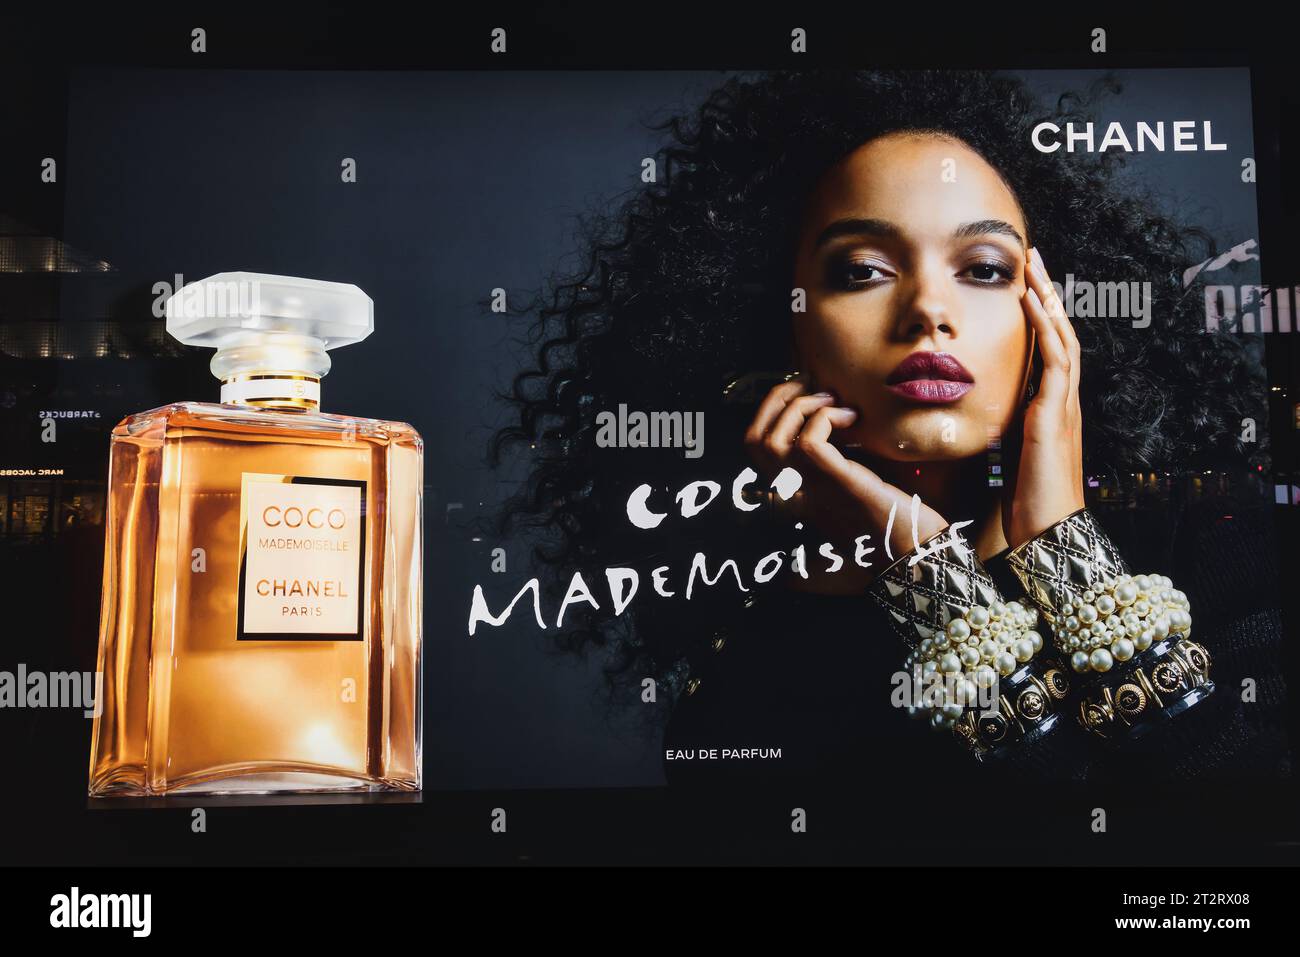 Chanel Chance Perfume Stock Photo - Alamy